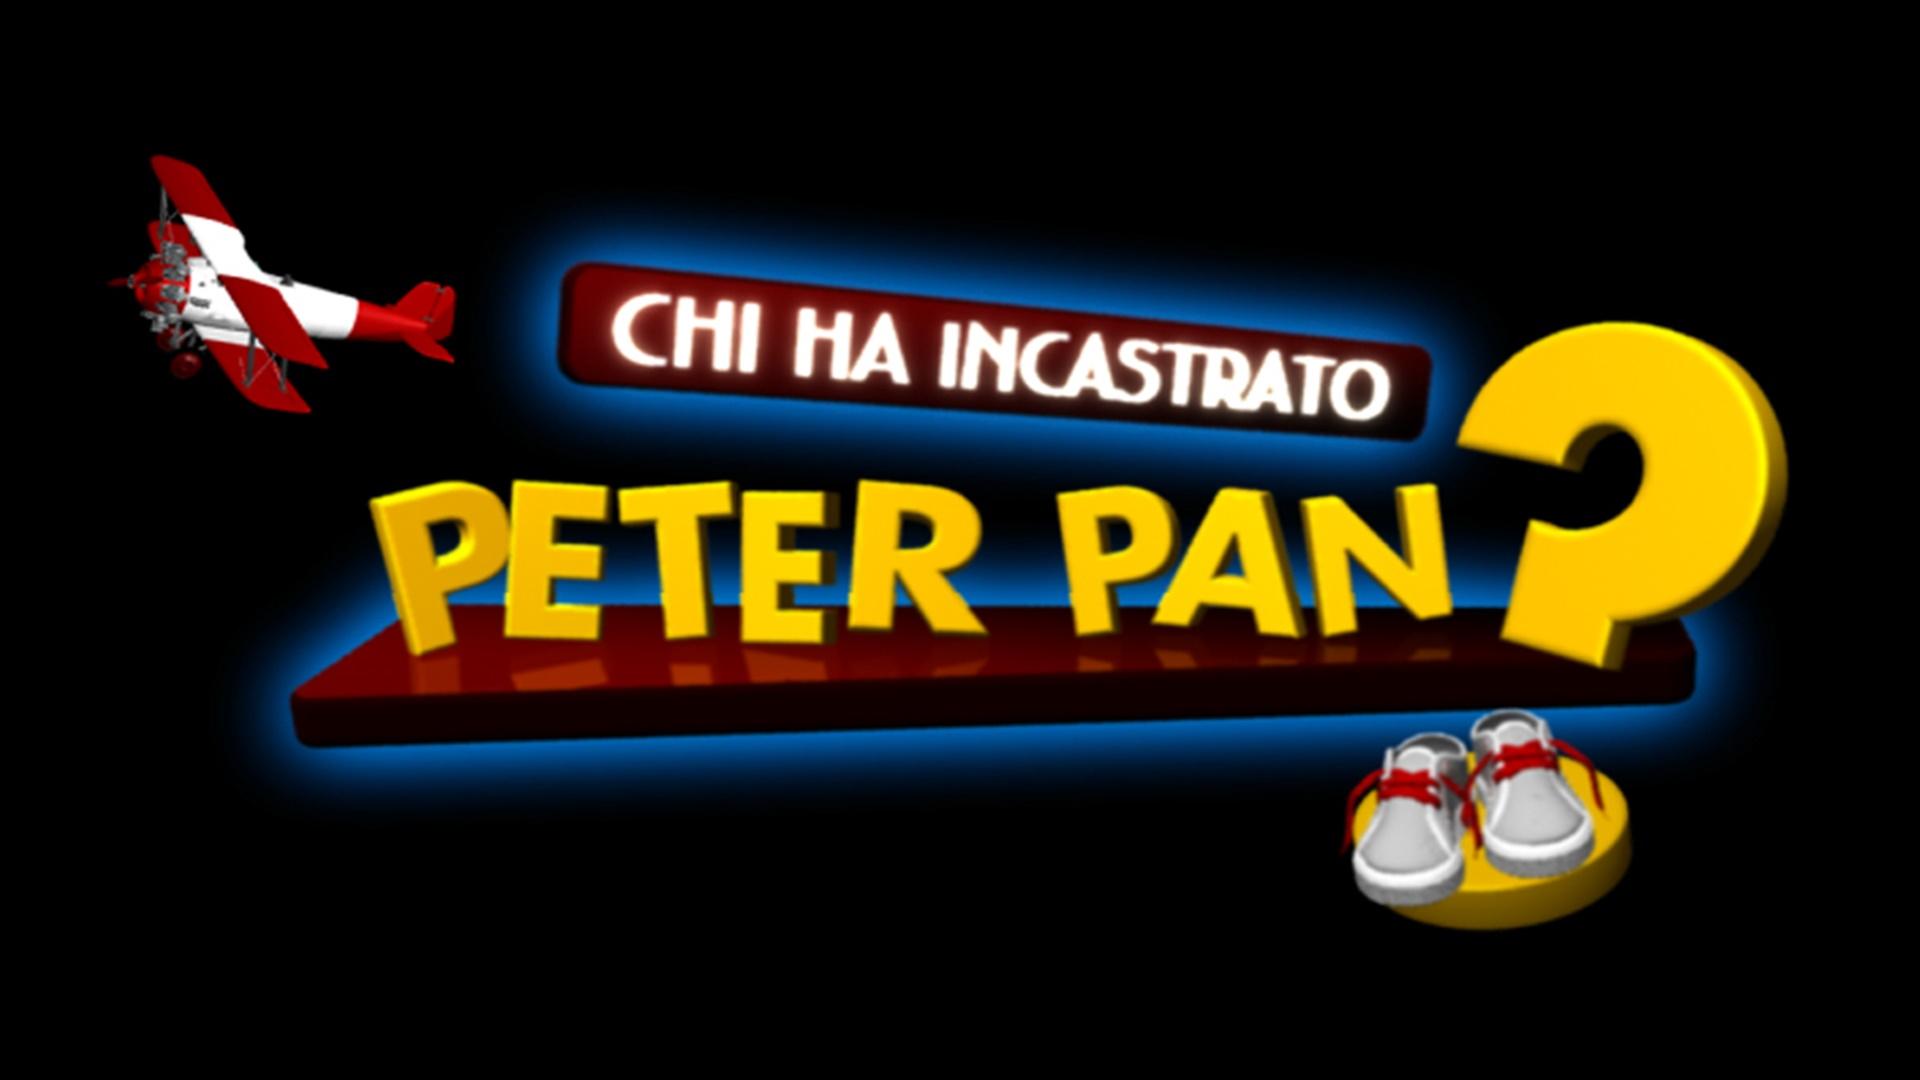 Chi ha incastrato Peter Pan?